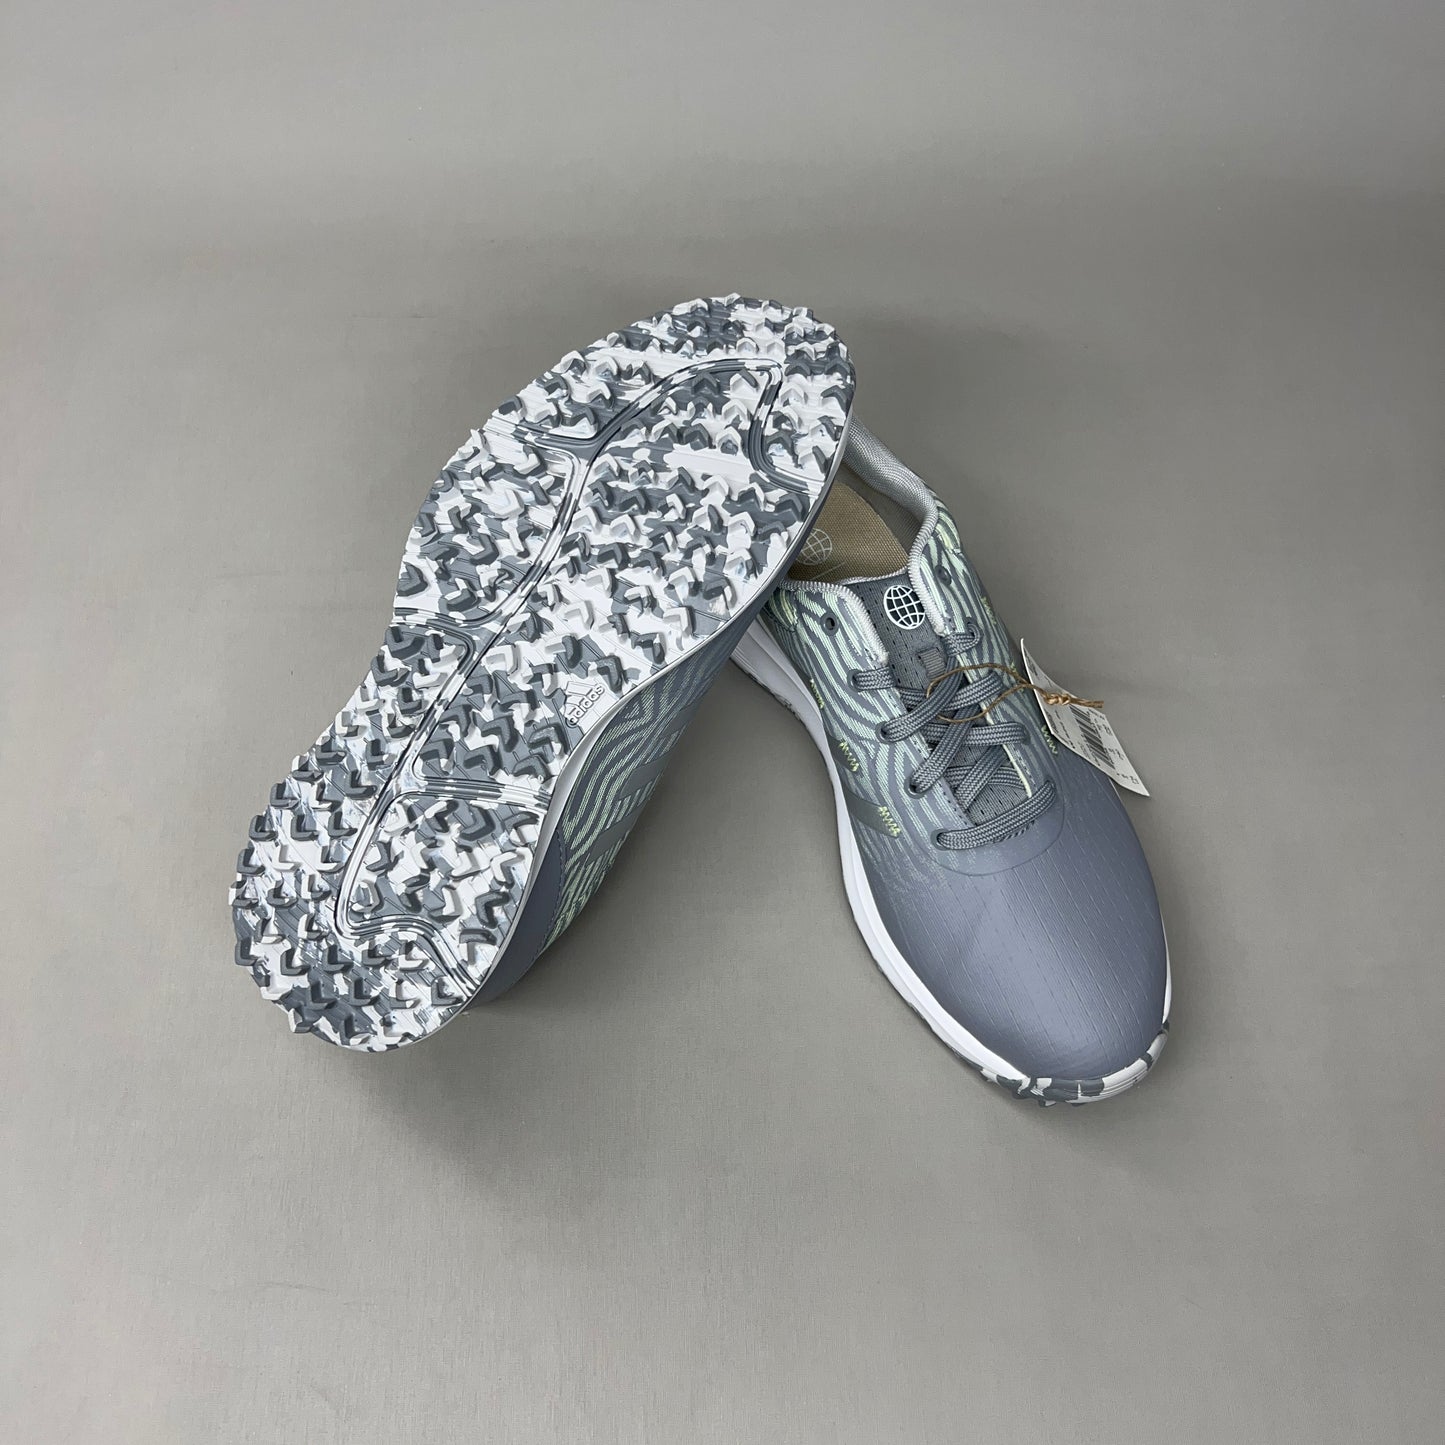 ADIDAS Golf Shoes W S2G SL Waterproof Women's Sz 7.5 Grey / Lime GZ3911 (New)